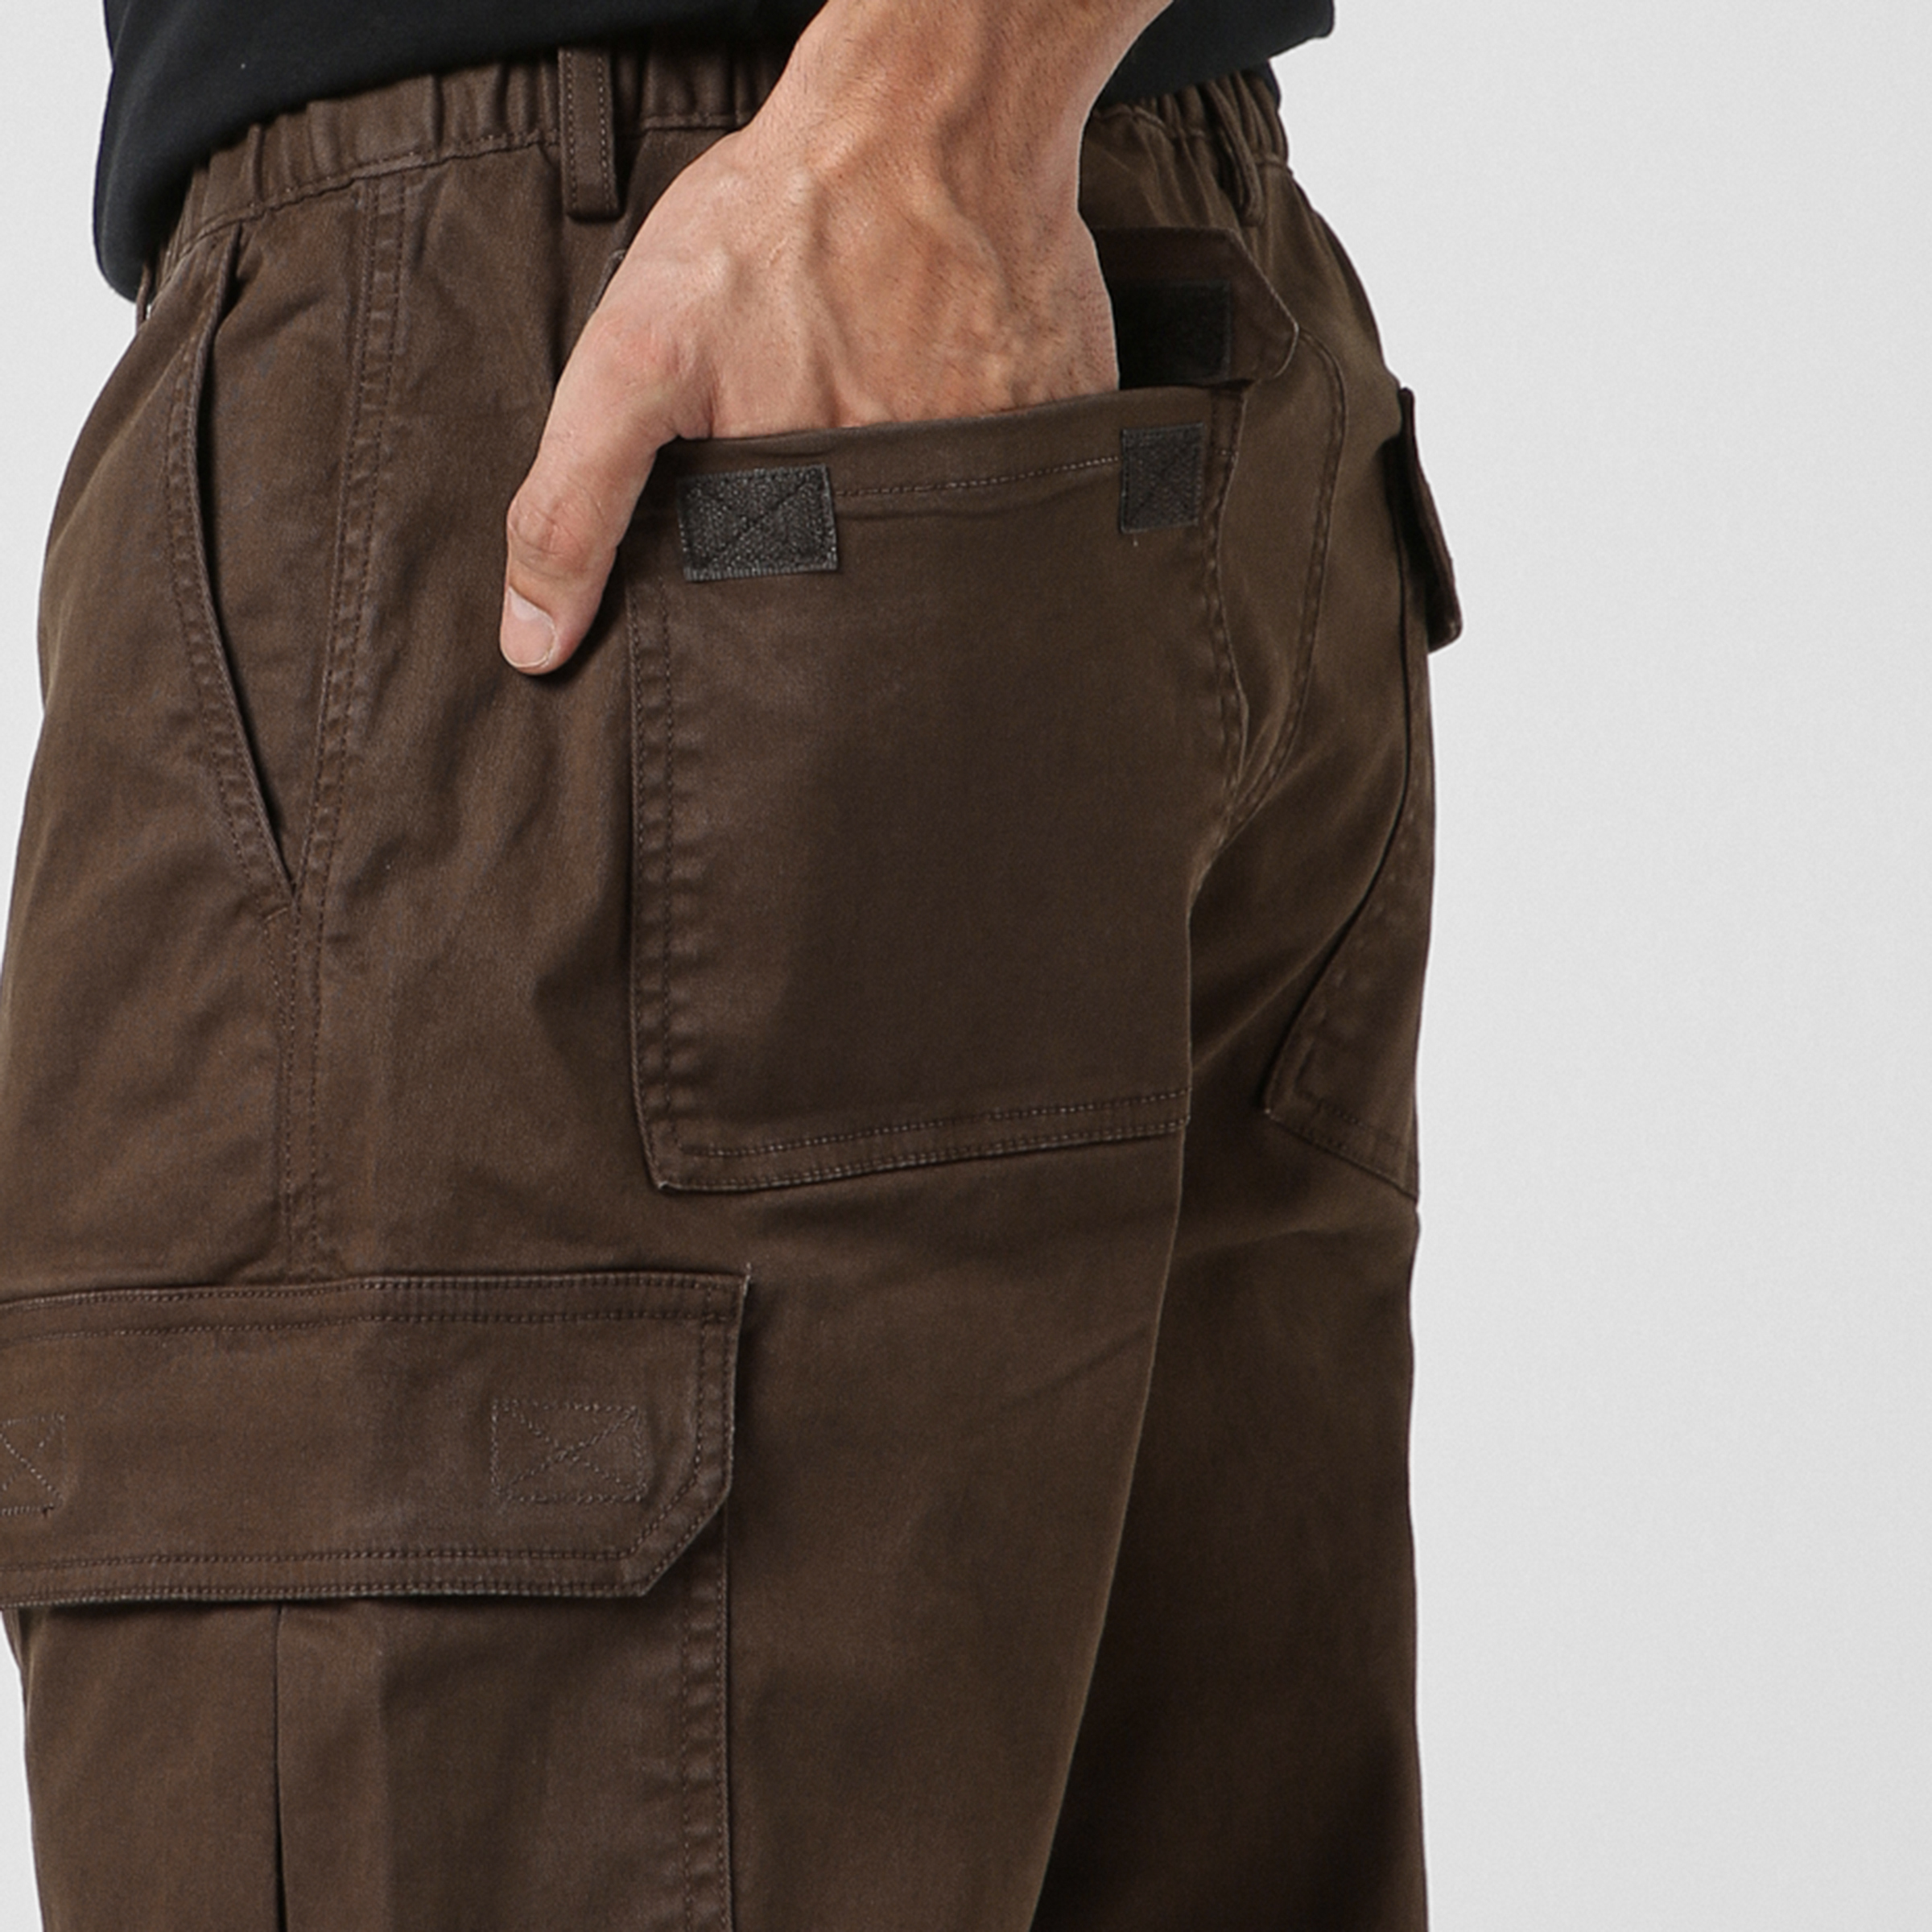 Stretch Cargo Pant Cocoa close up back velcro pockets